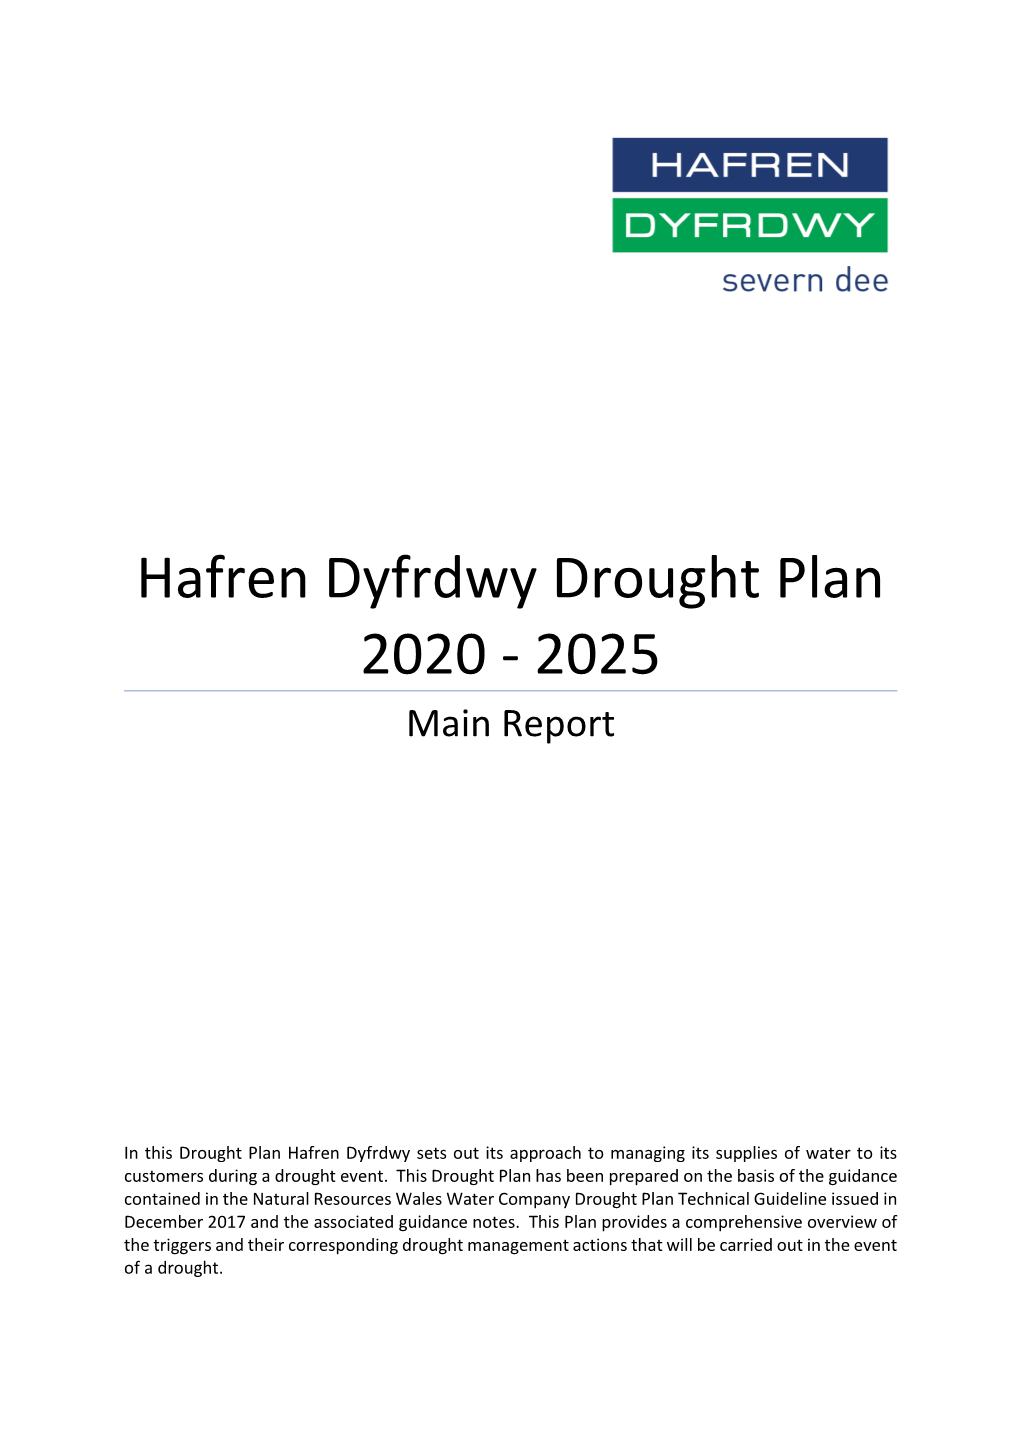 Hafren Dyfrdwy Drought Plan 2020 - 2025 Main Report